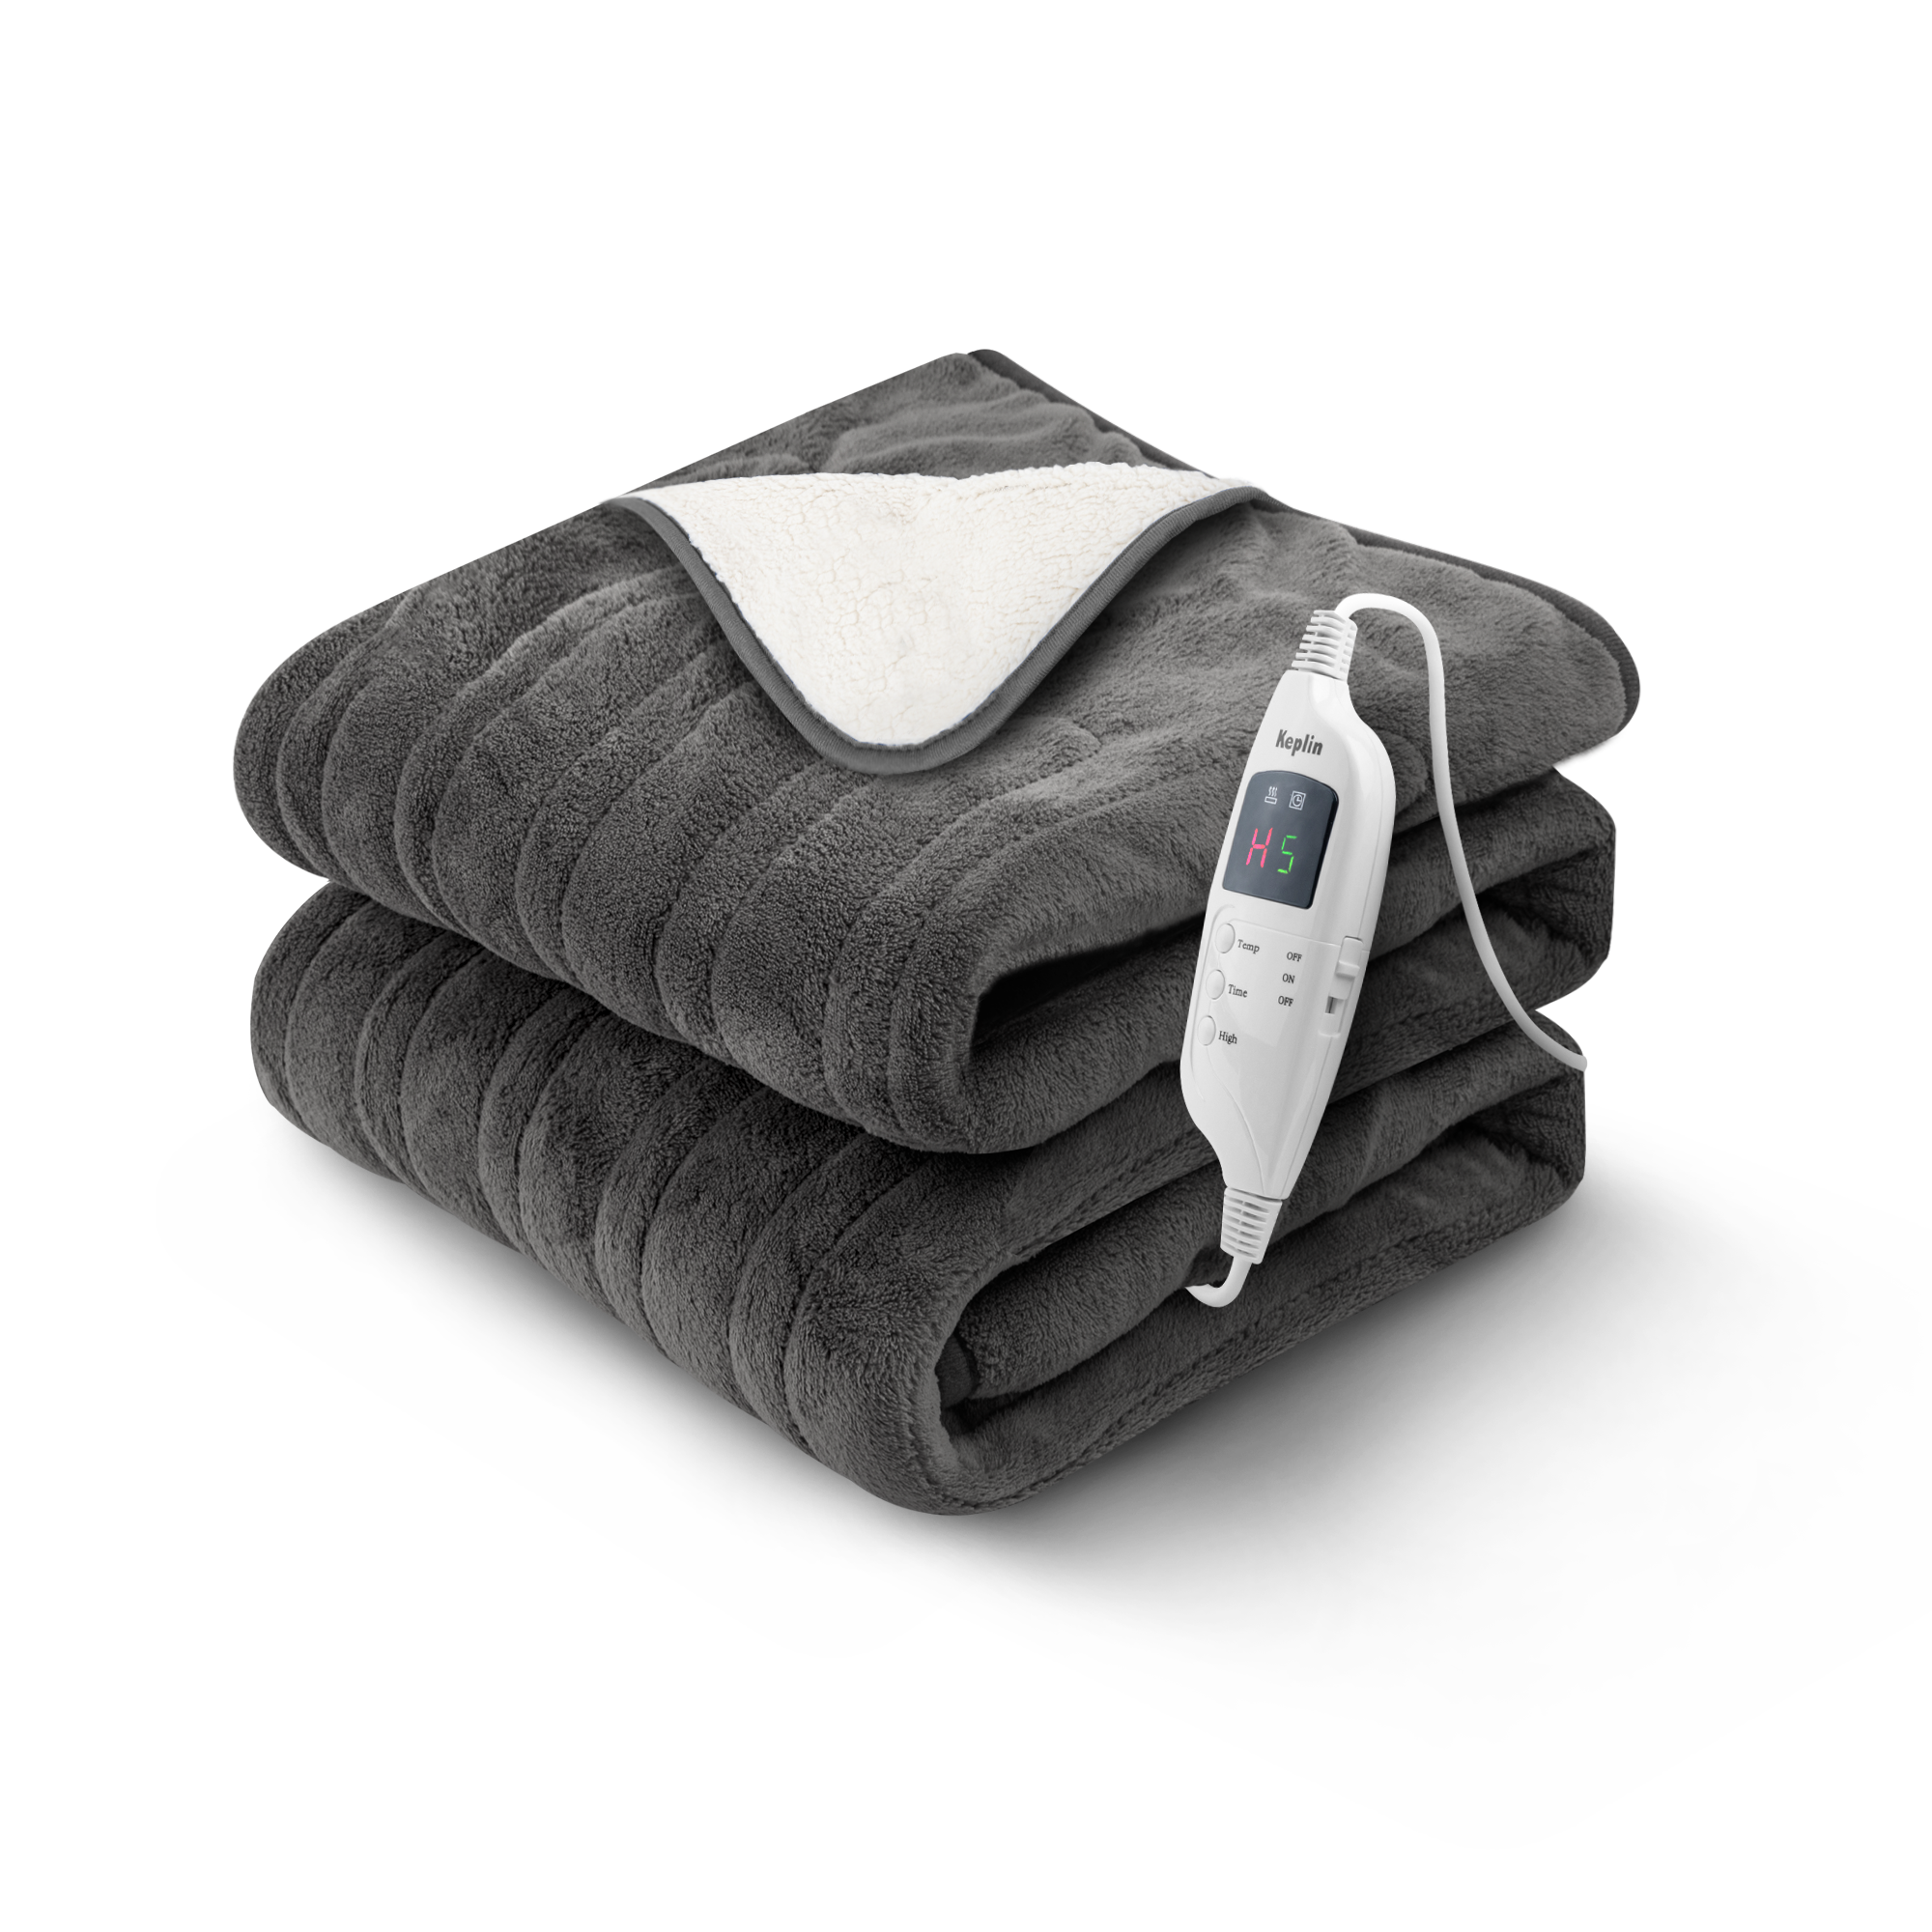 Electric Heated Throw Blanket - Machine Washable Fleece Wool Duvet, 9 Heat Settings & Timer